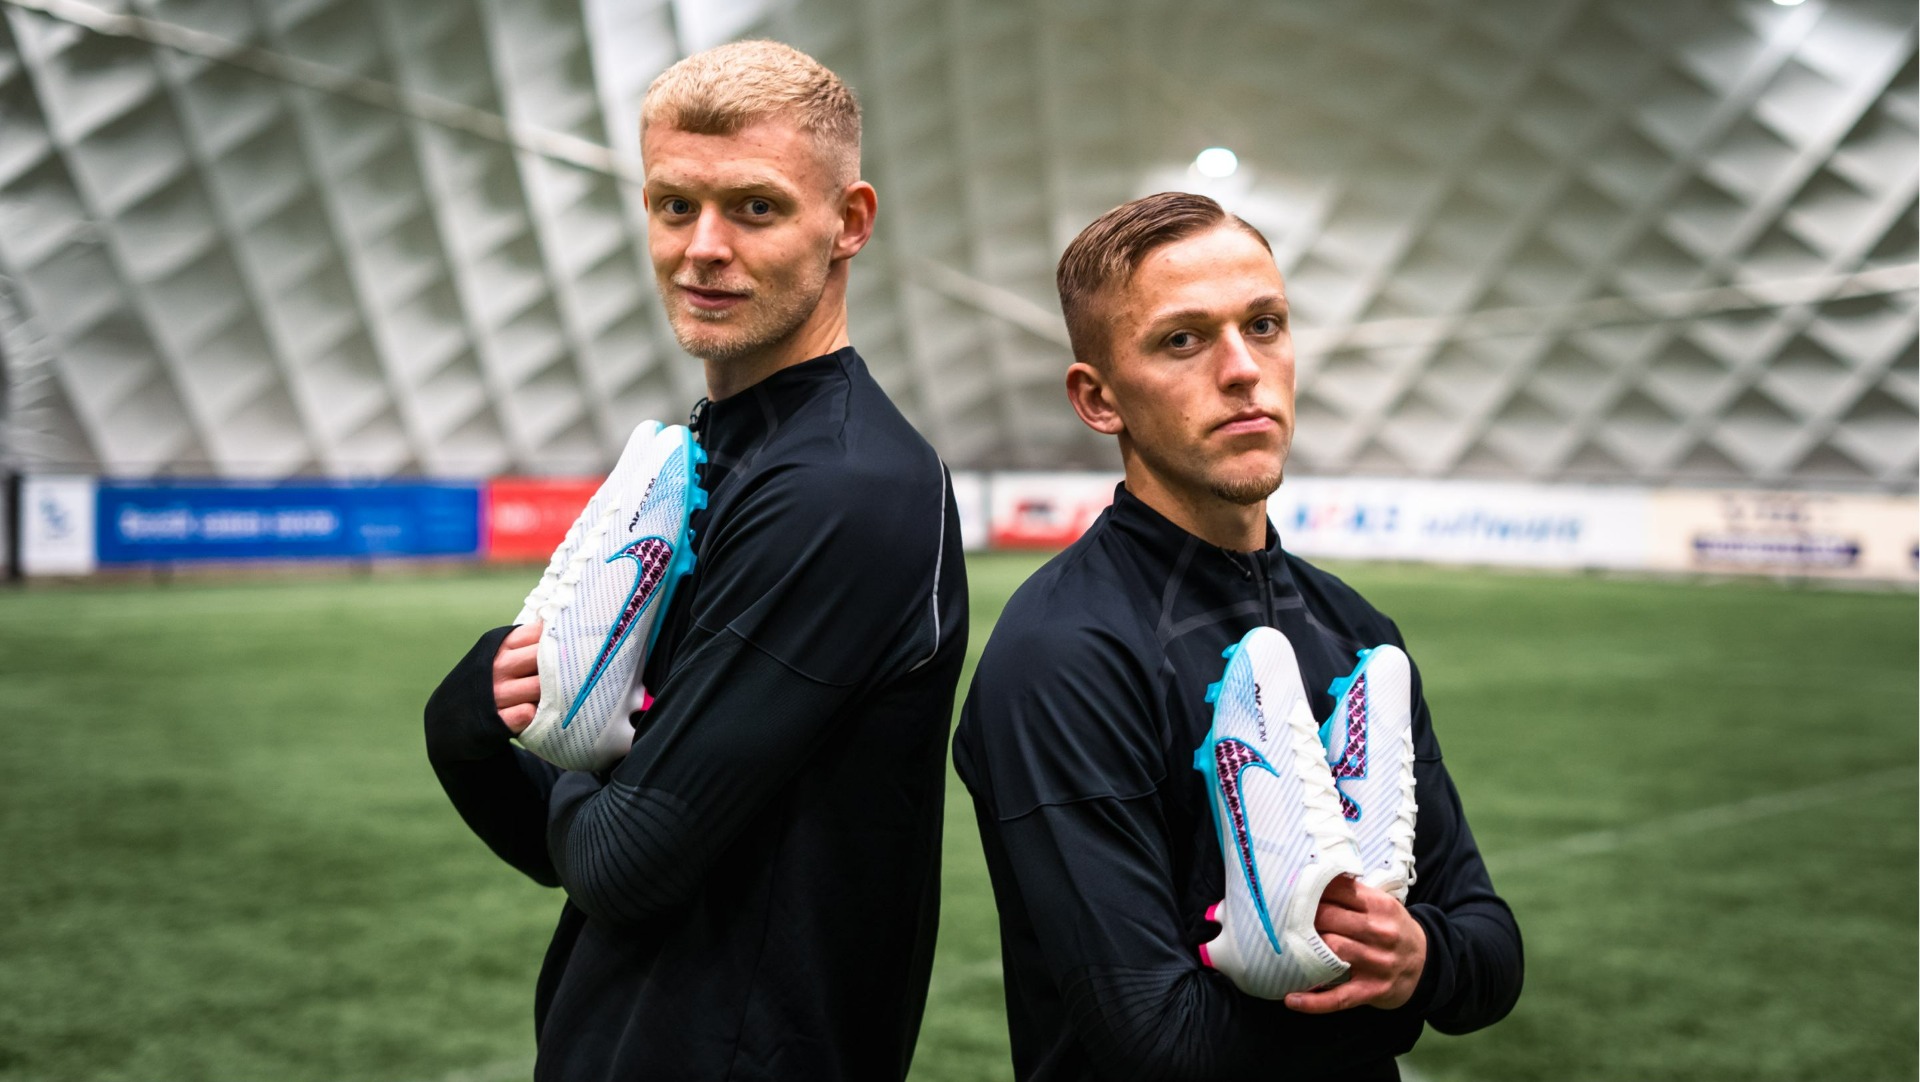 Meet The Pro | Jens Odgaard en Jesper Karlsson van AZ Alkmaar